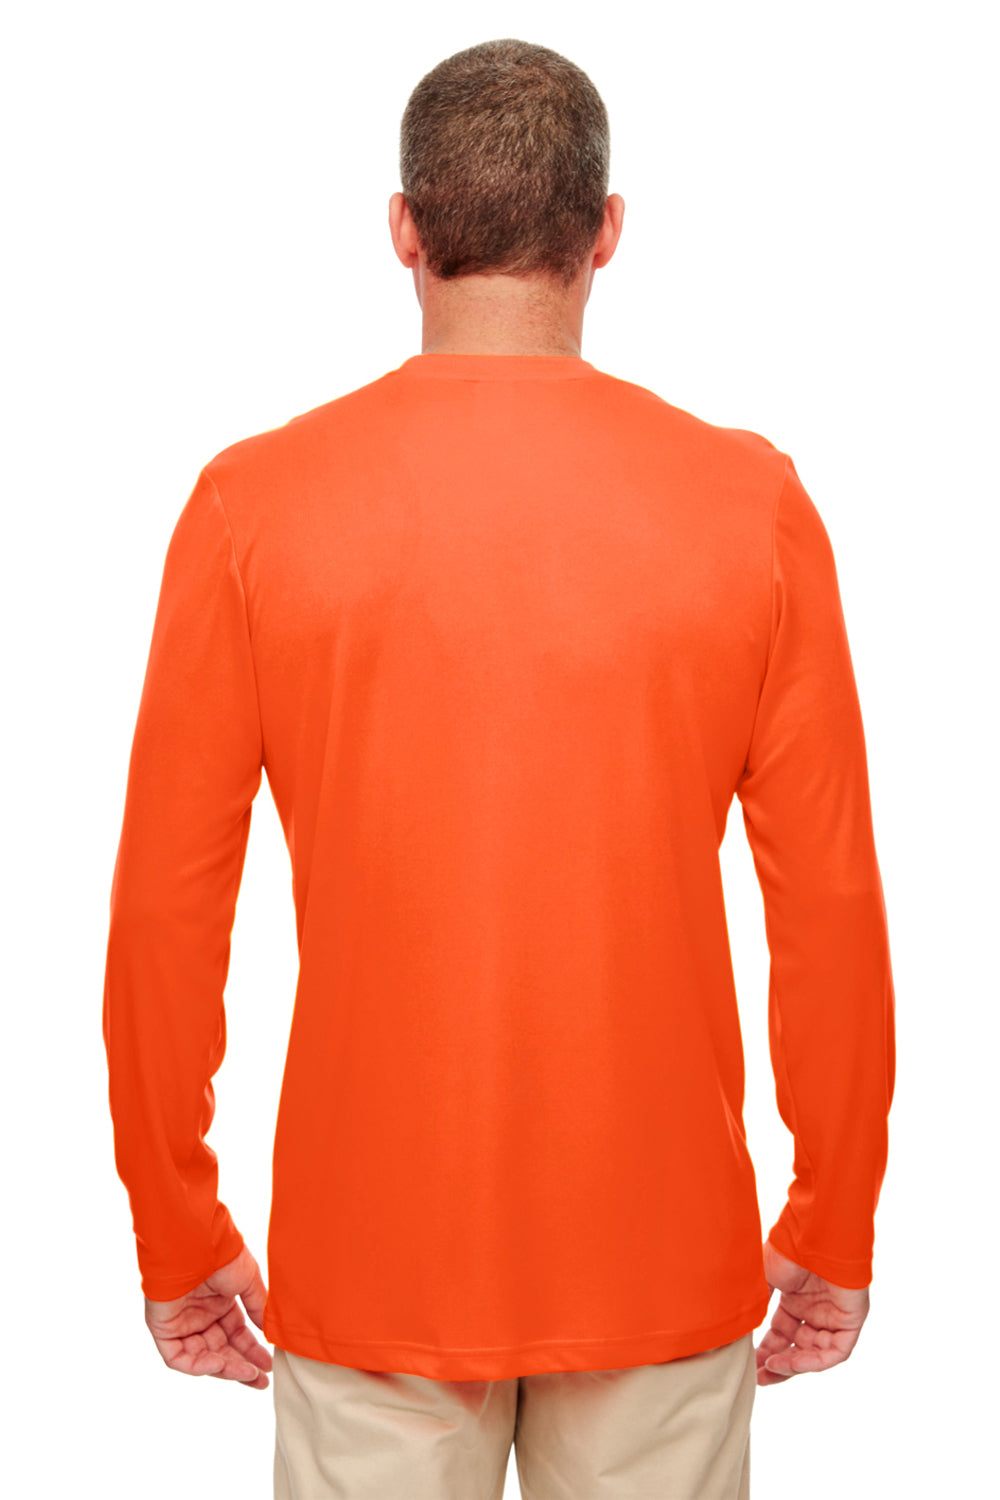 UltraClub 8622 Mens Cool & Dry Performance Moisture Wicking Long Sleeve Crewneck T-Shirt Orange Back